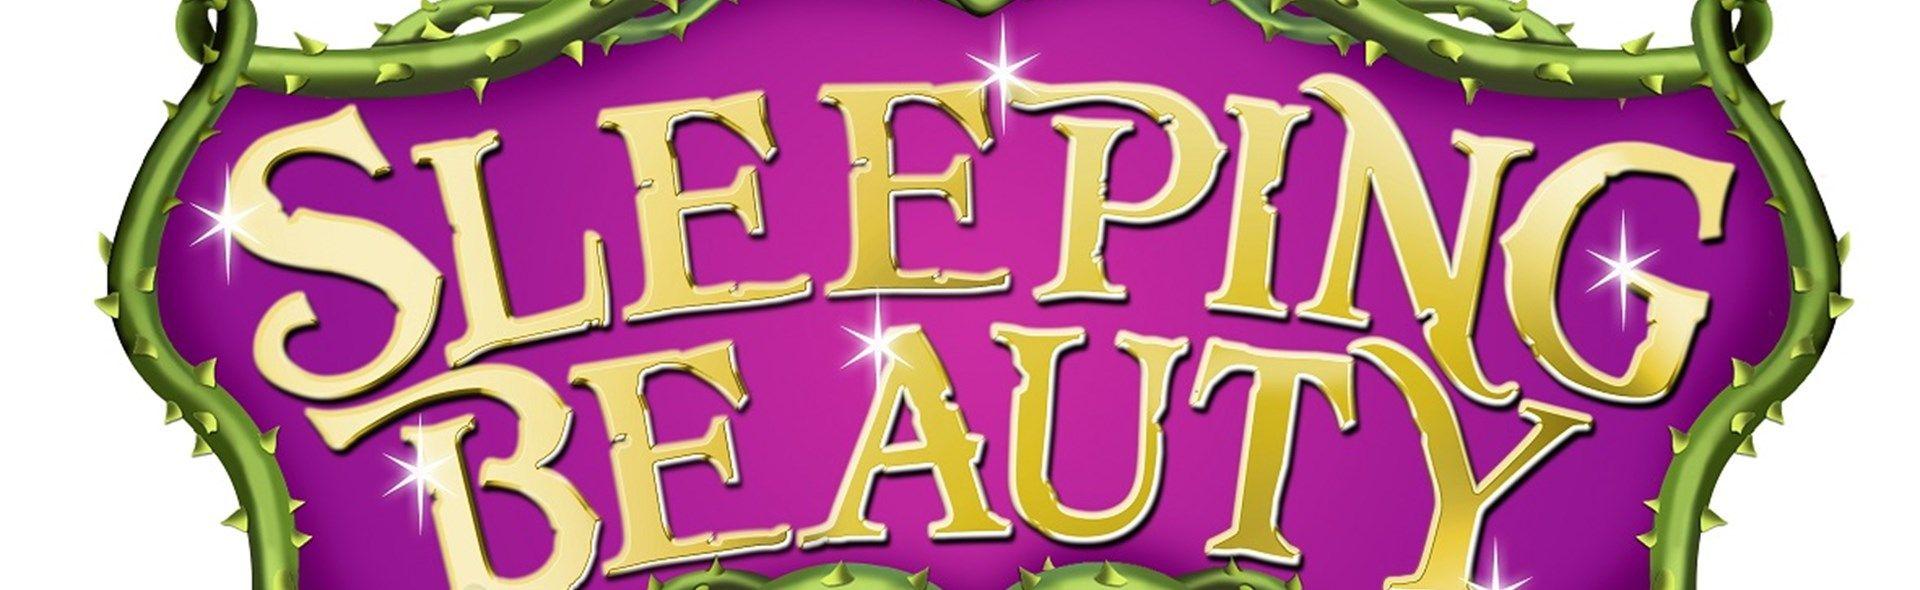 Sleeping Beauty Logo - Sleeping Beauty Auditions